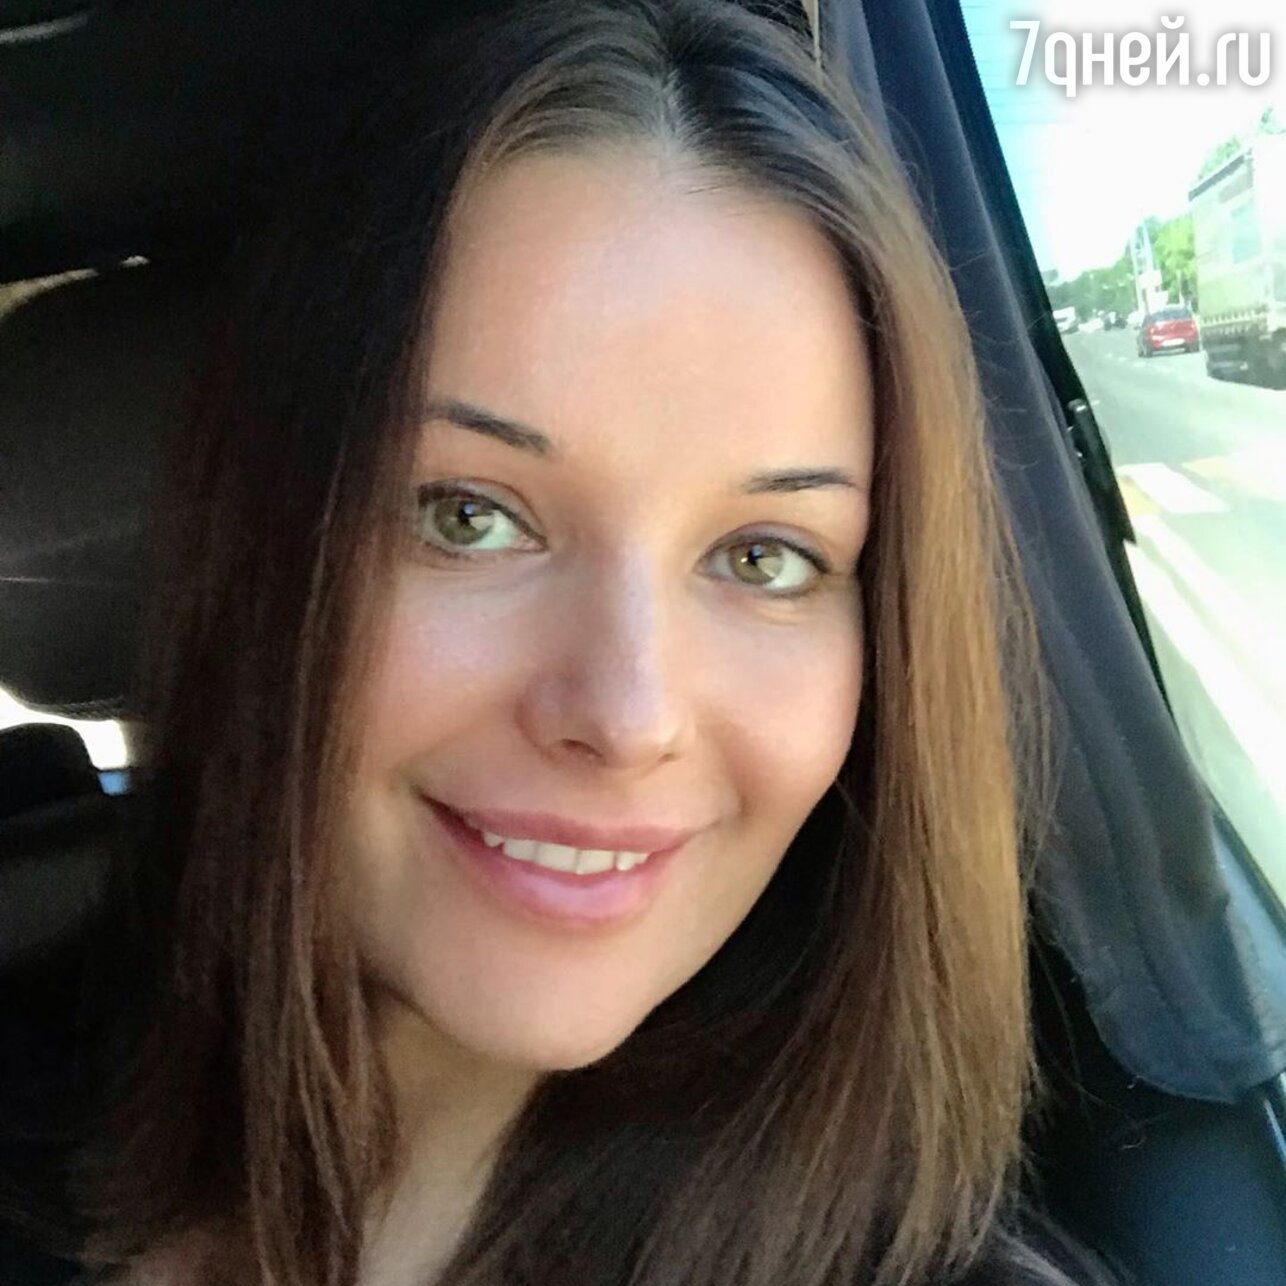 Оксана Федорова без макияжа